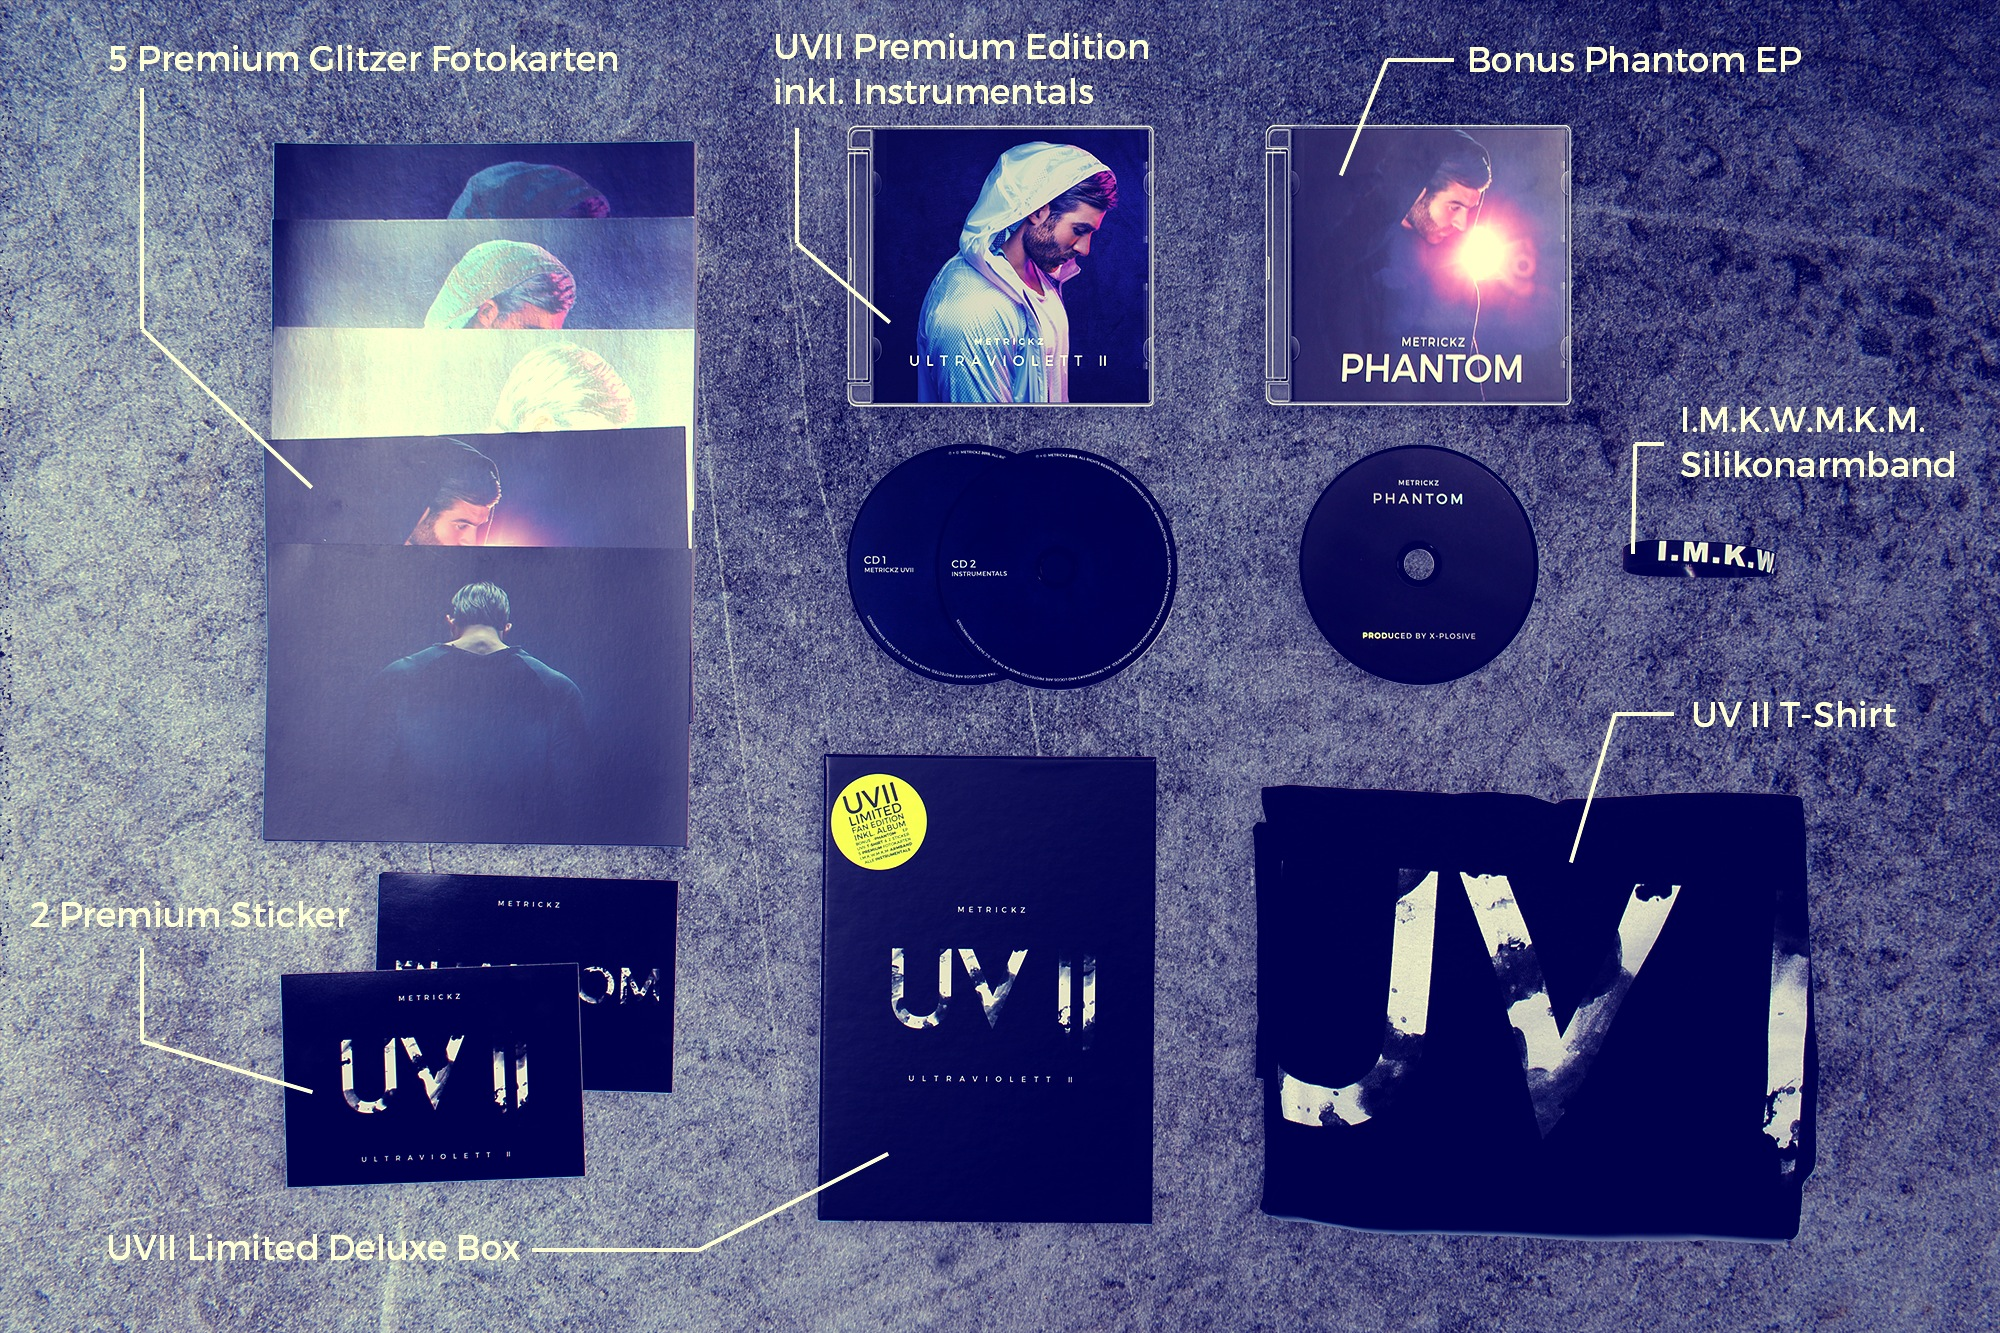 II Ultraviolett (CD) - Metrickz -